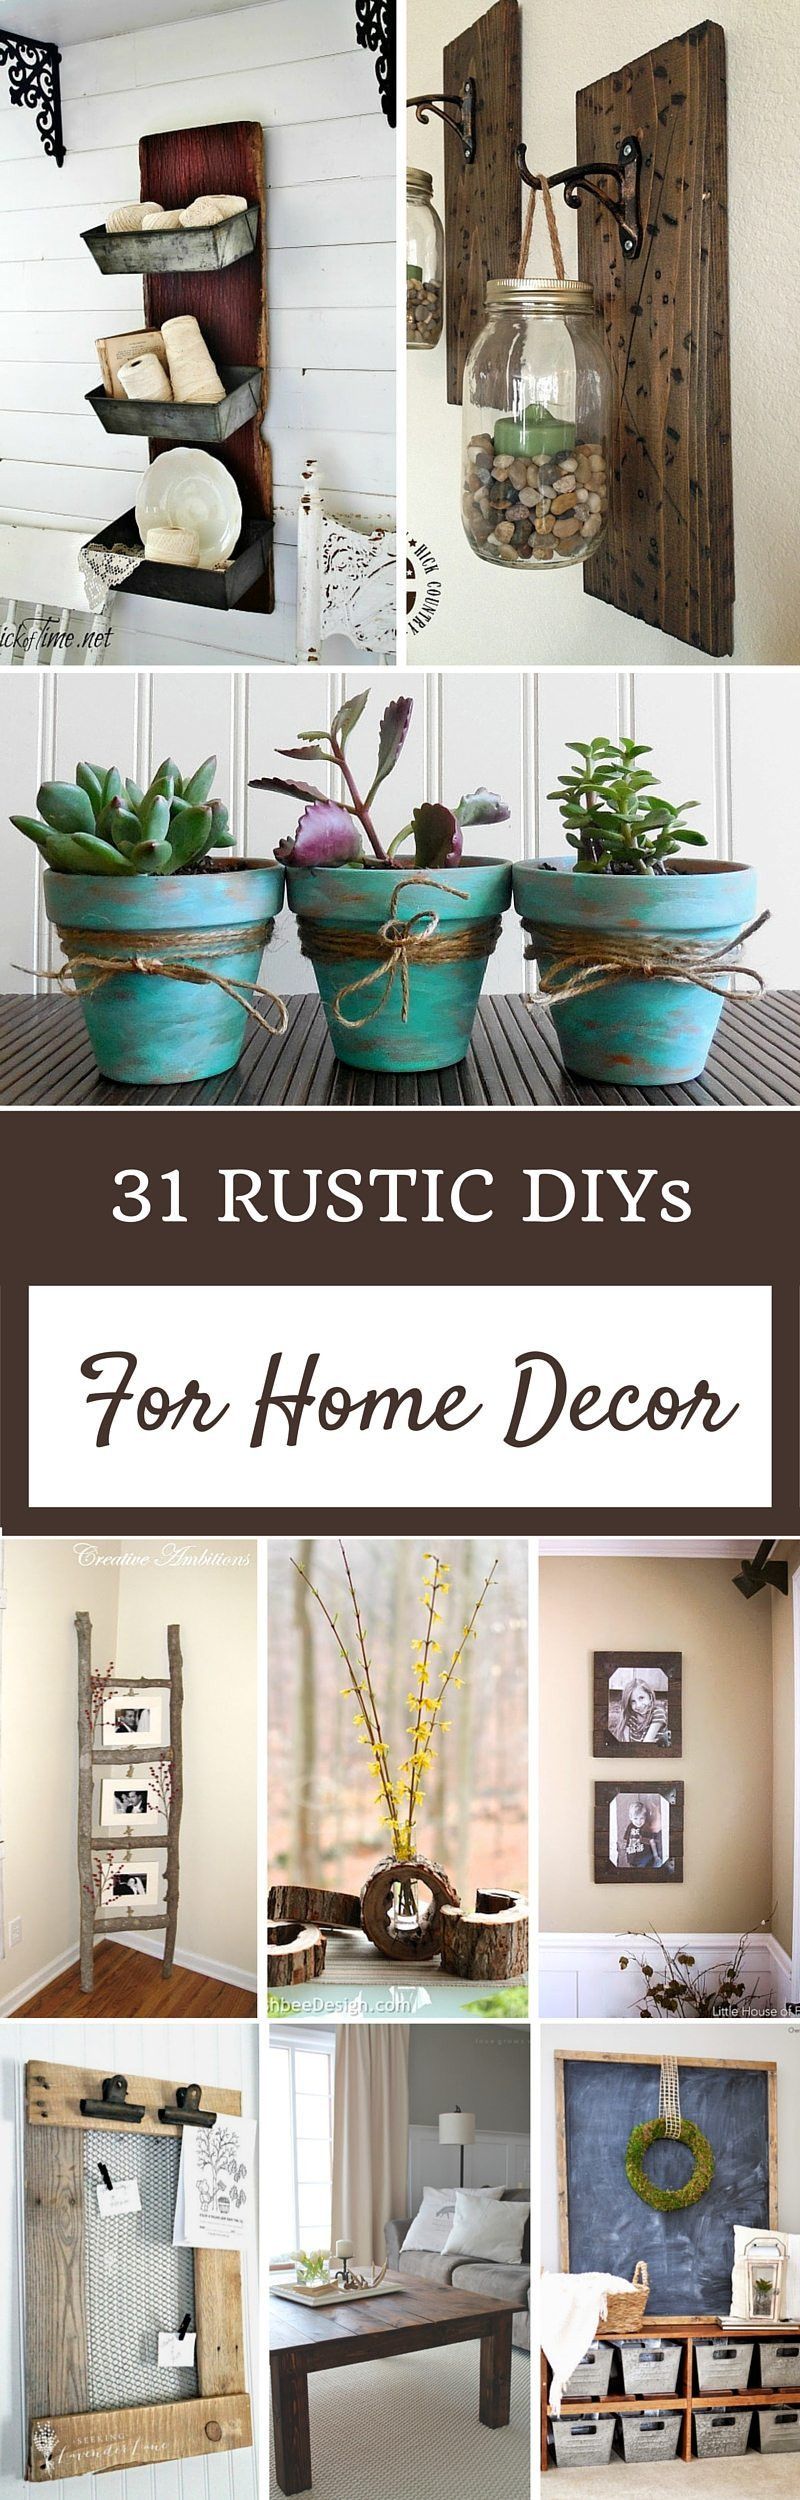 DIY Home Decorating Pinterest
 Rustic Home Decor Ideas